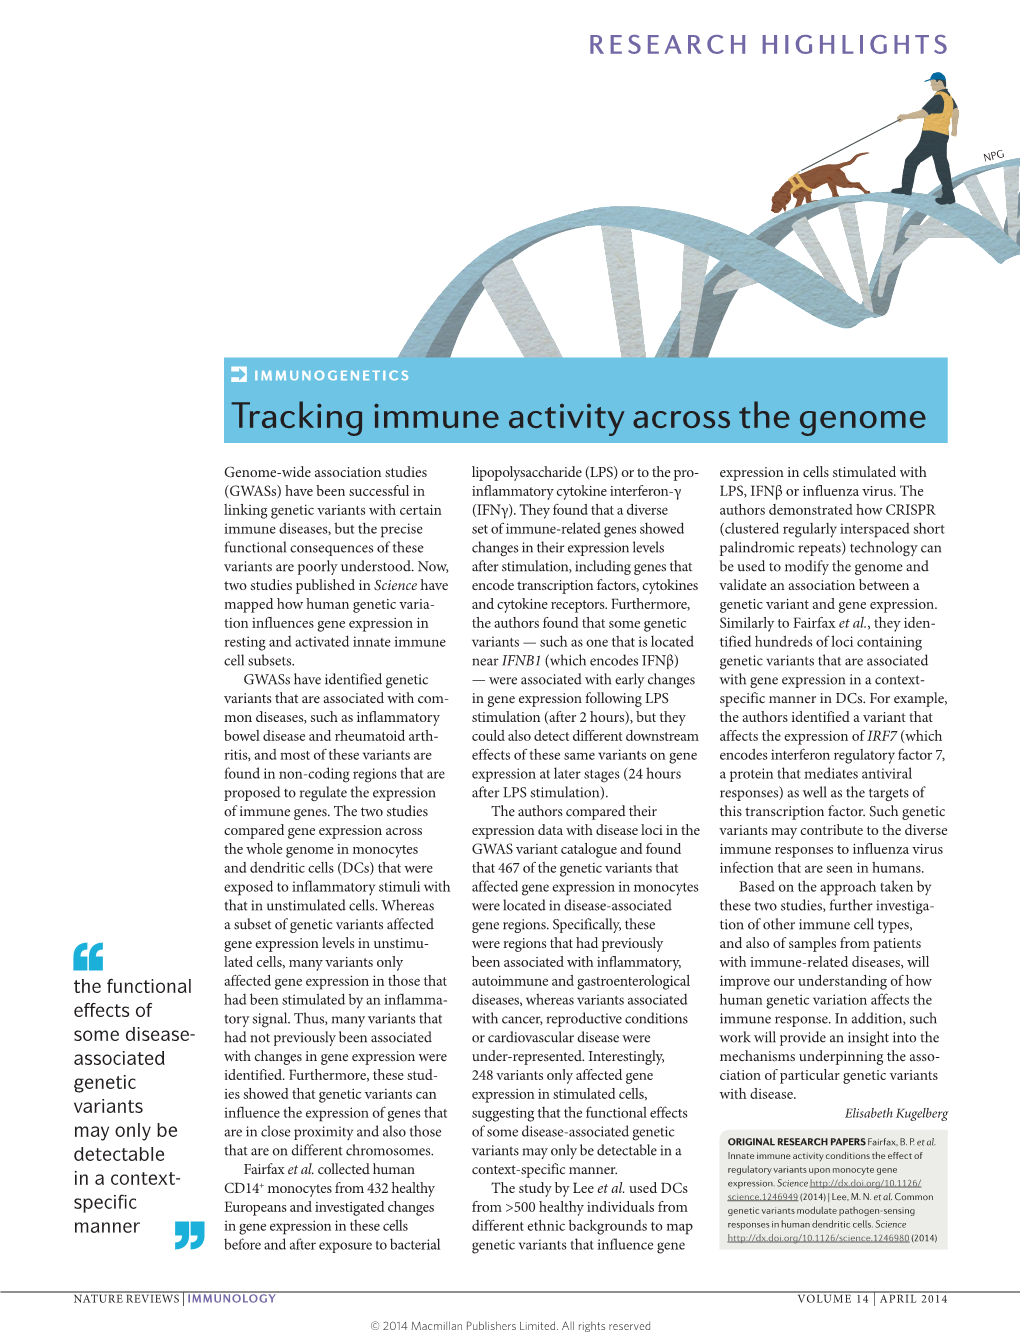 IMMUNOGENETICS Tracking Immune Activity Across the Genome